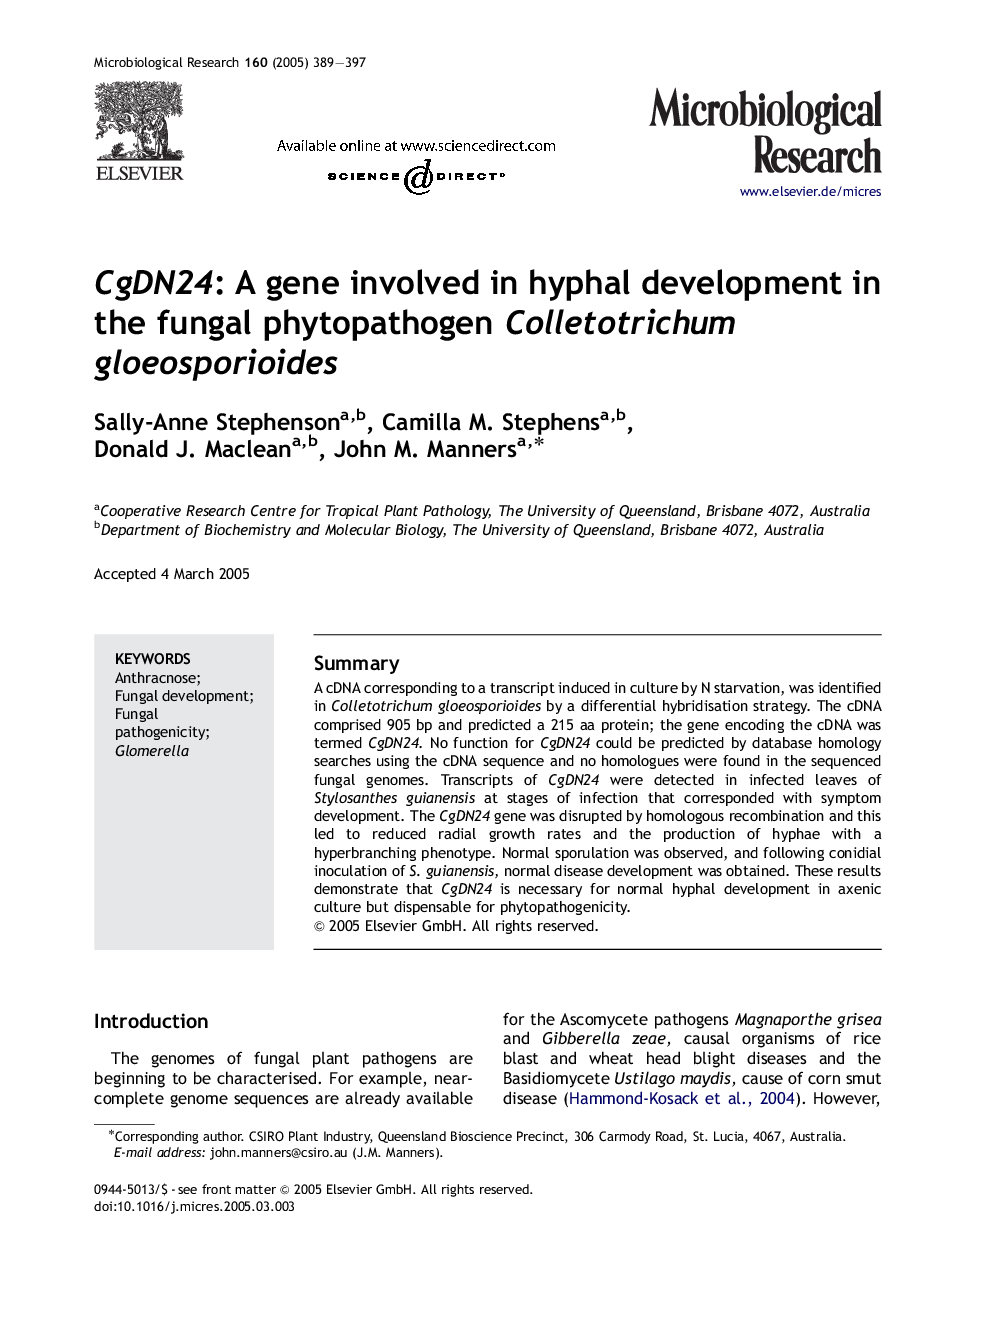 CgDN24: A gene involved in hyphal development in the fungal phytopathogen Colletotrichum gloeosporioides